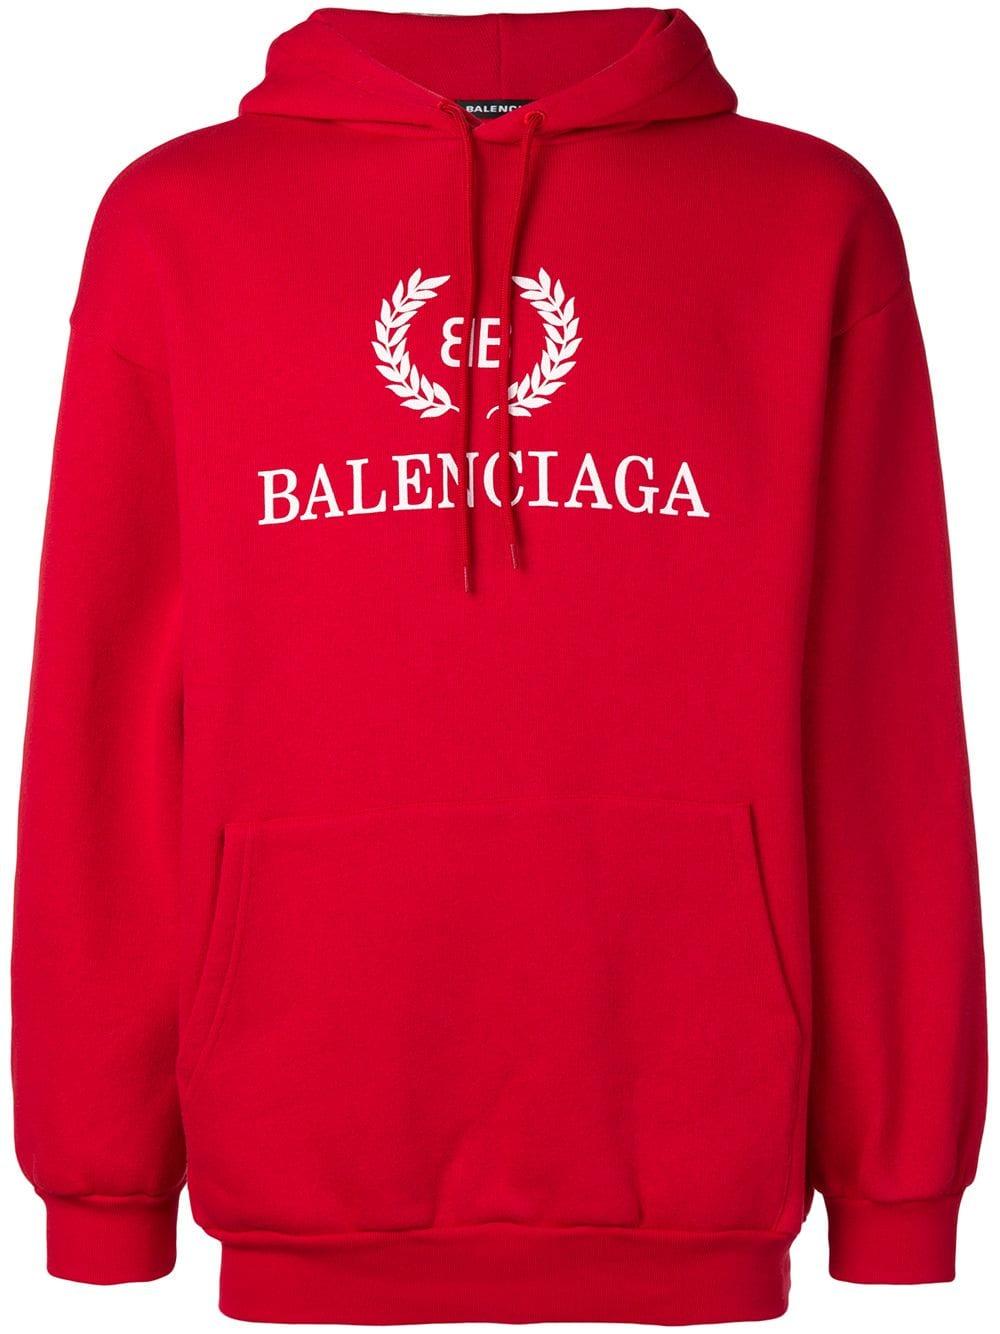 Maglia Balenciaga Falsa Cheapest Selling, 49% OFF | landivarinspira.edu.gt